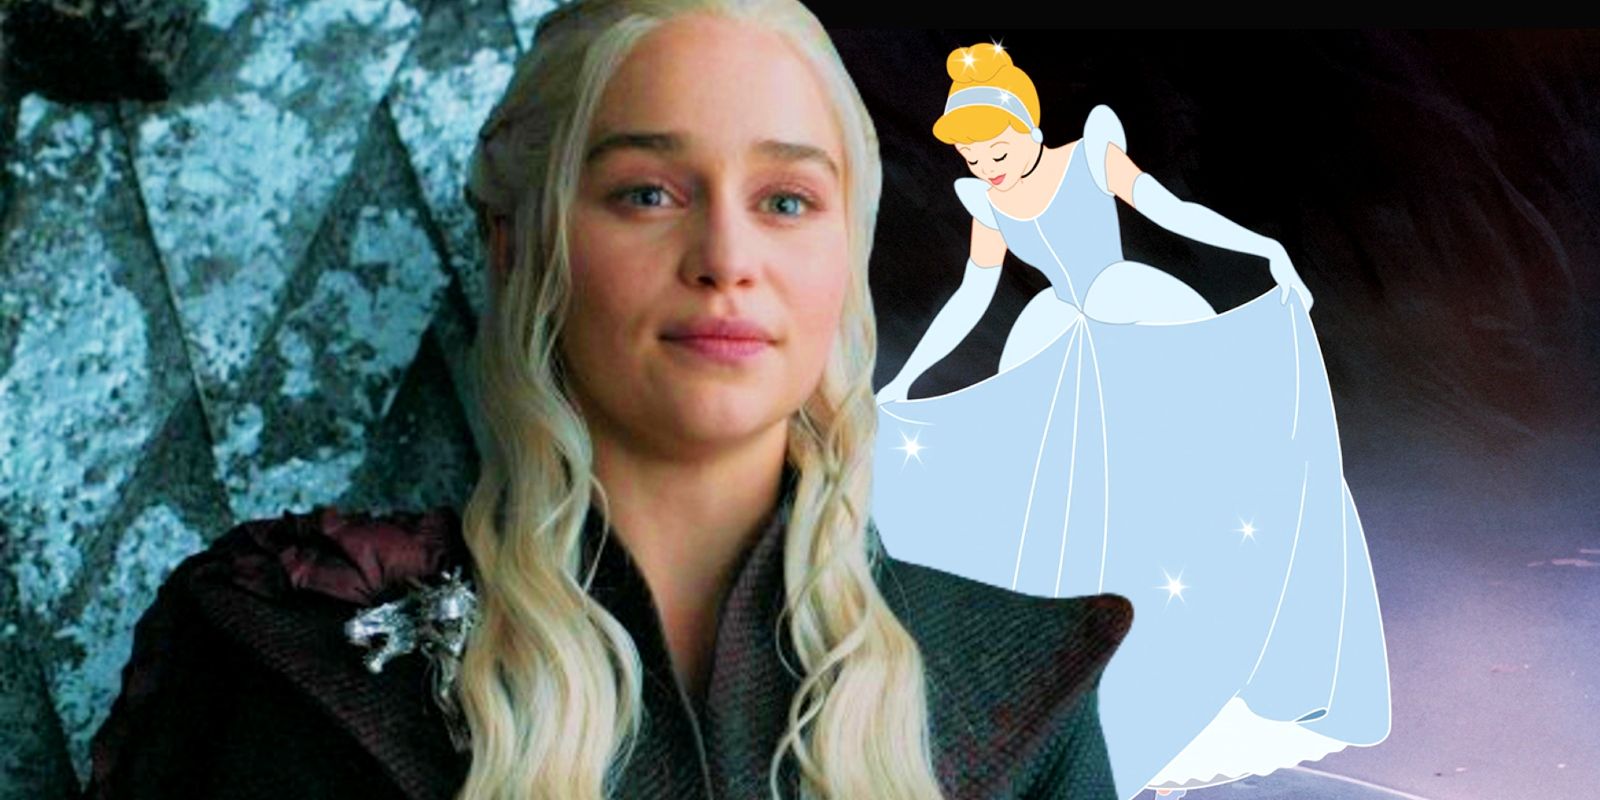 Emilia Clarke as Danaerys Targaryen in Game of Thrones juxtaposed with Cinderella